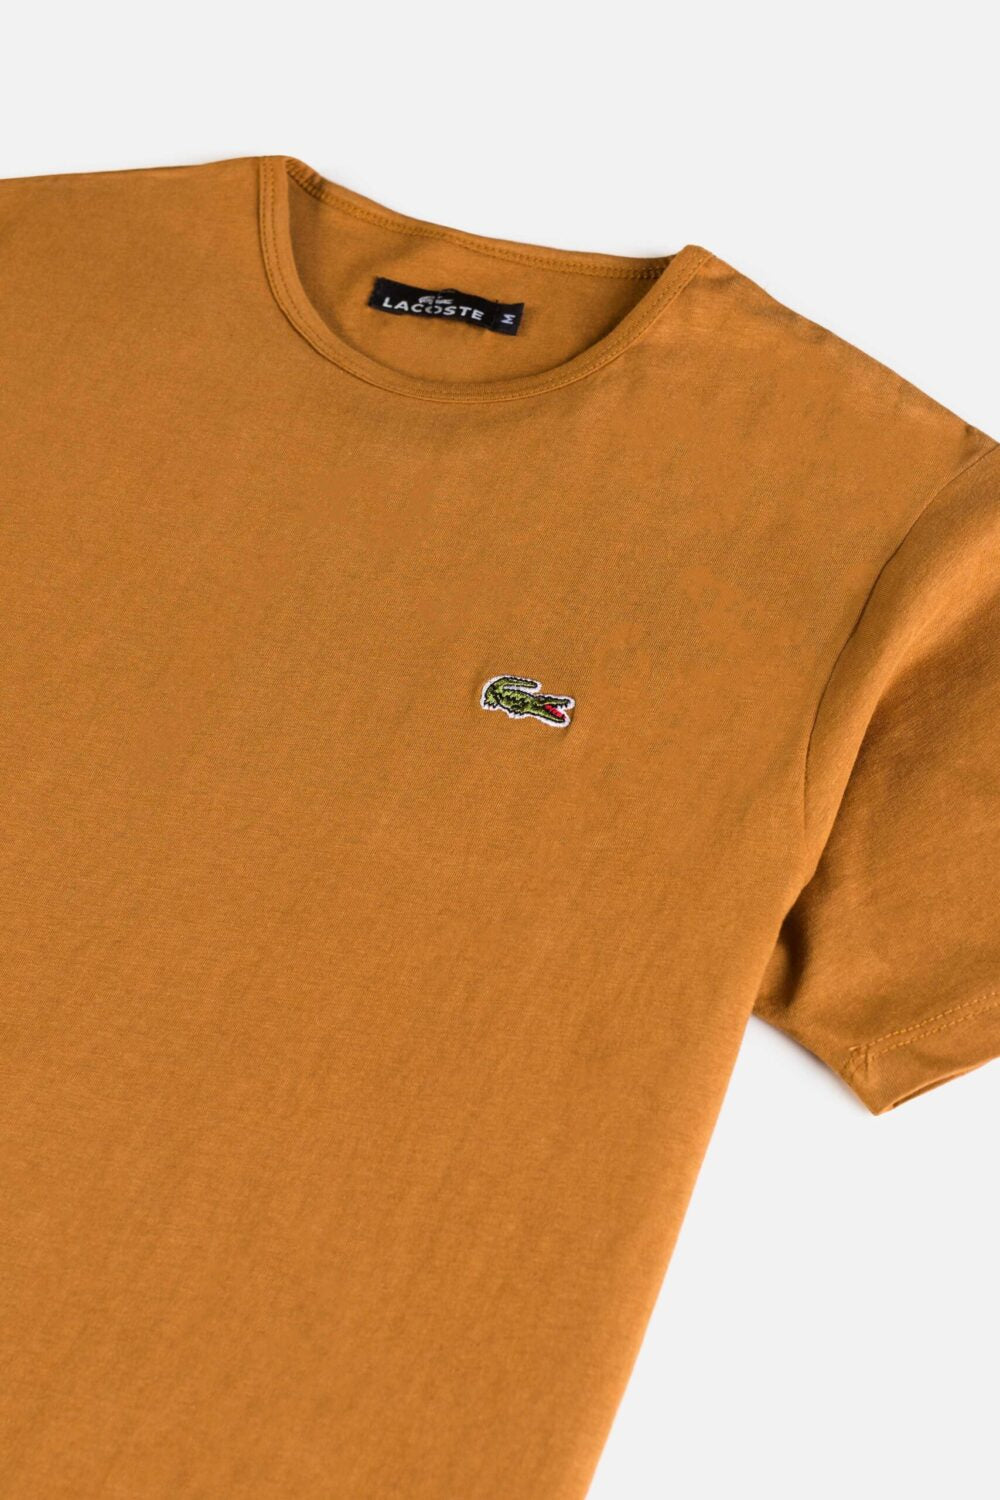 Lacoste Premium Cotton T Shirt – Mustard